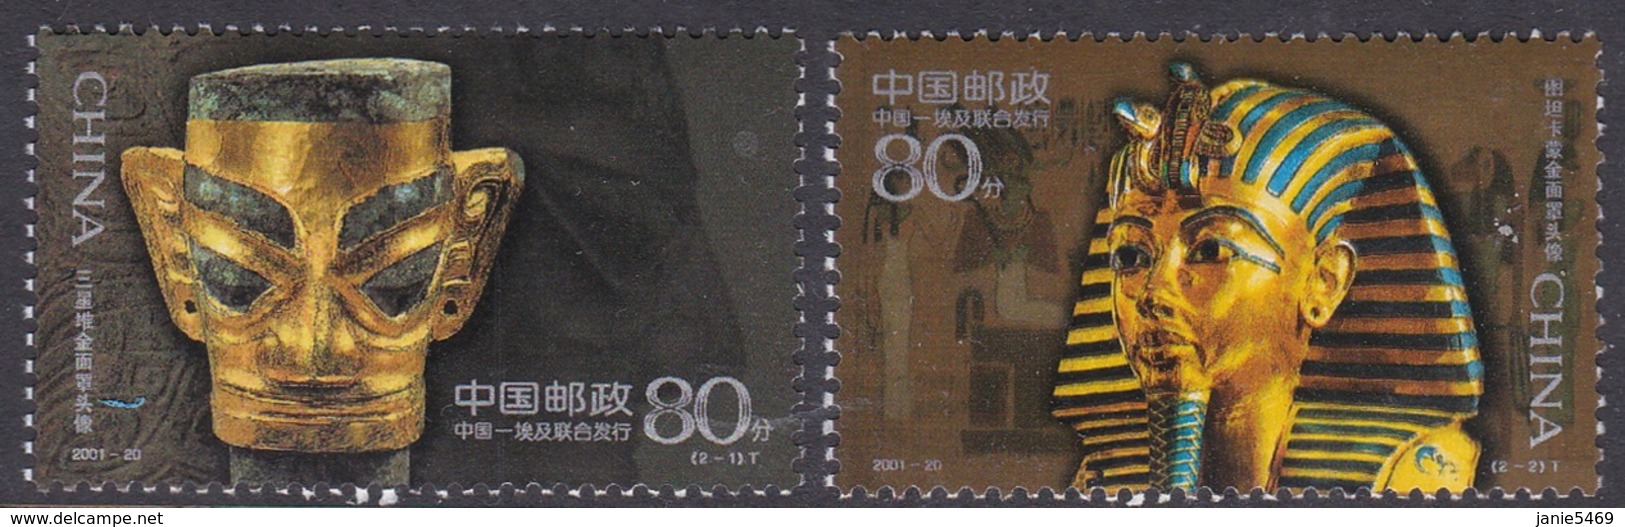 China People's Republic Scott 3141-3142 2001 Gold Masks, Mint Never Hinged - Neufs